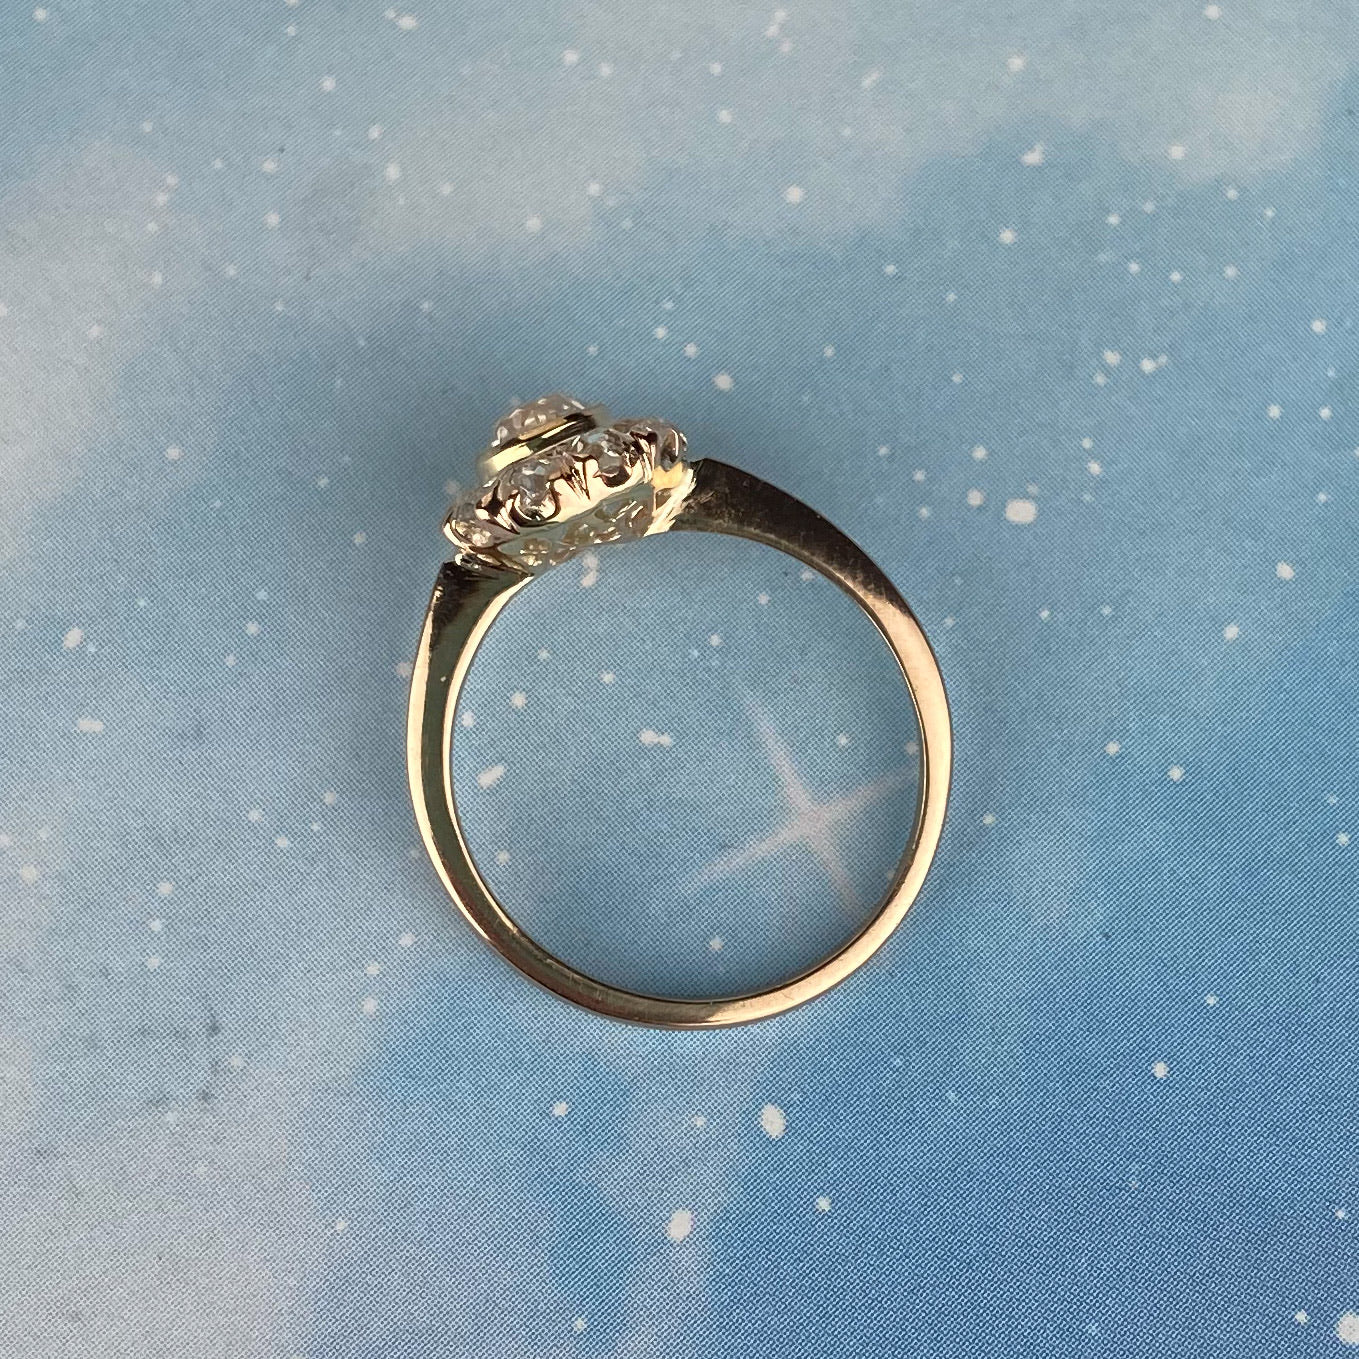 SOLD--Edwardian Old European Diamond Cluster Engagement Ring 14k